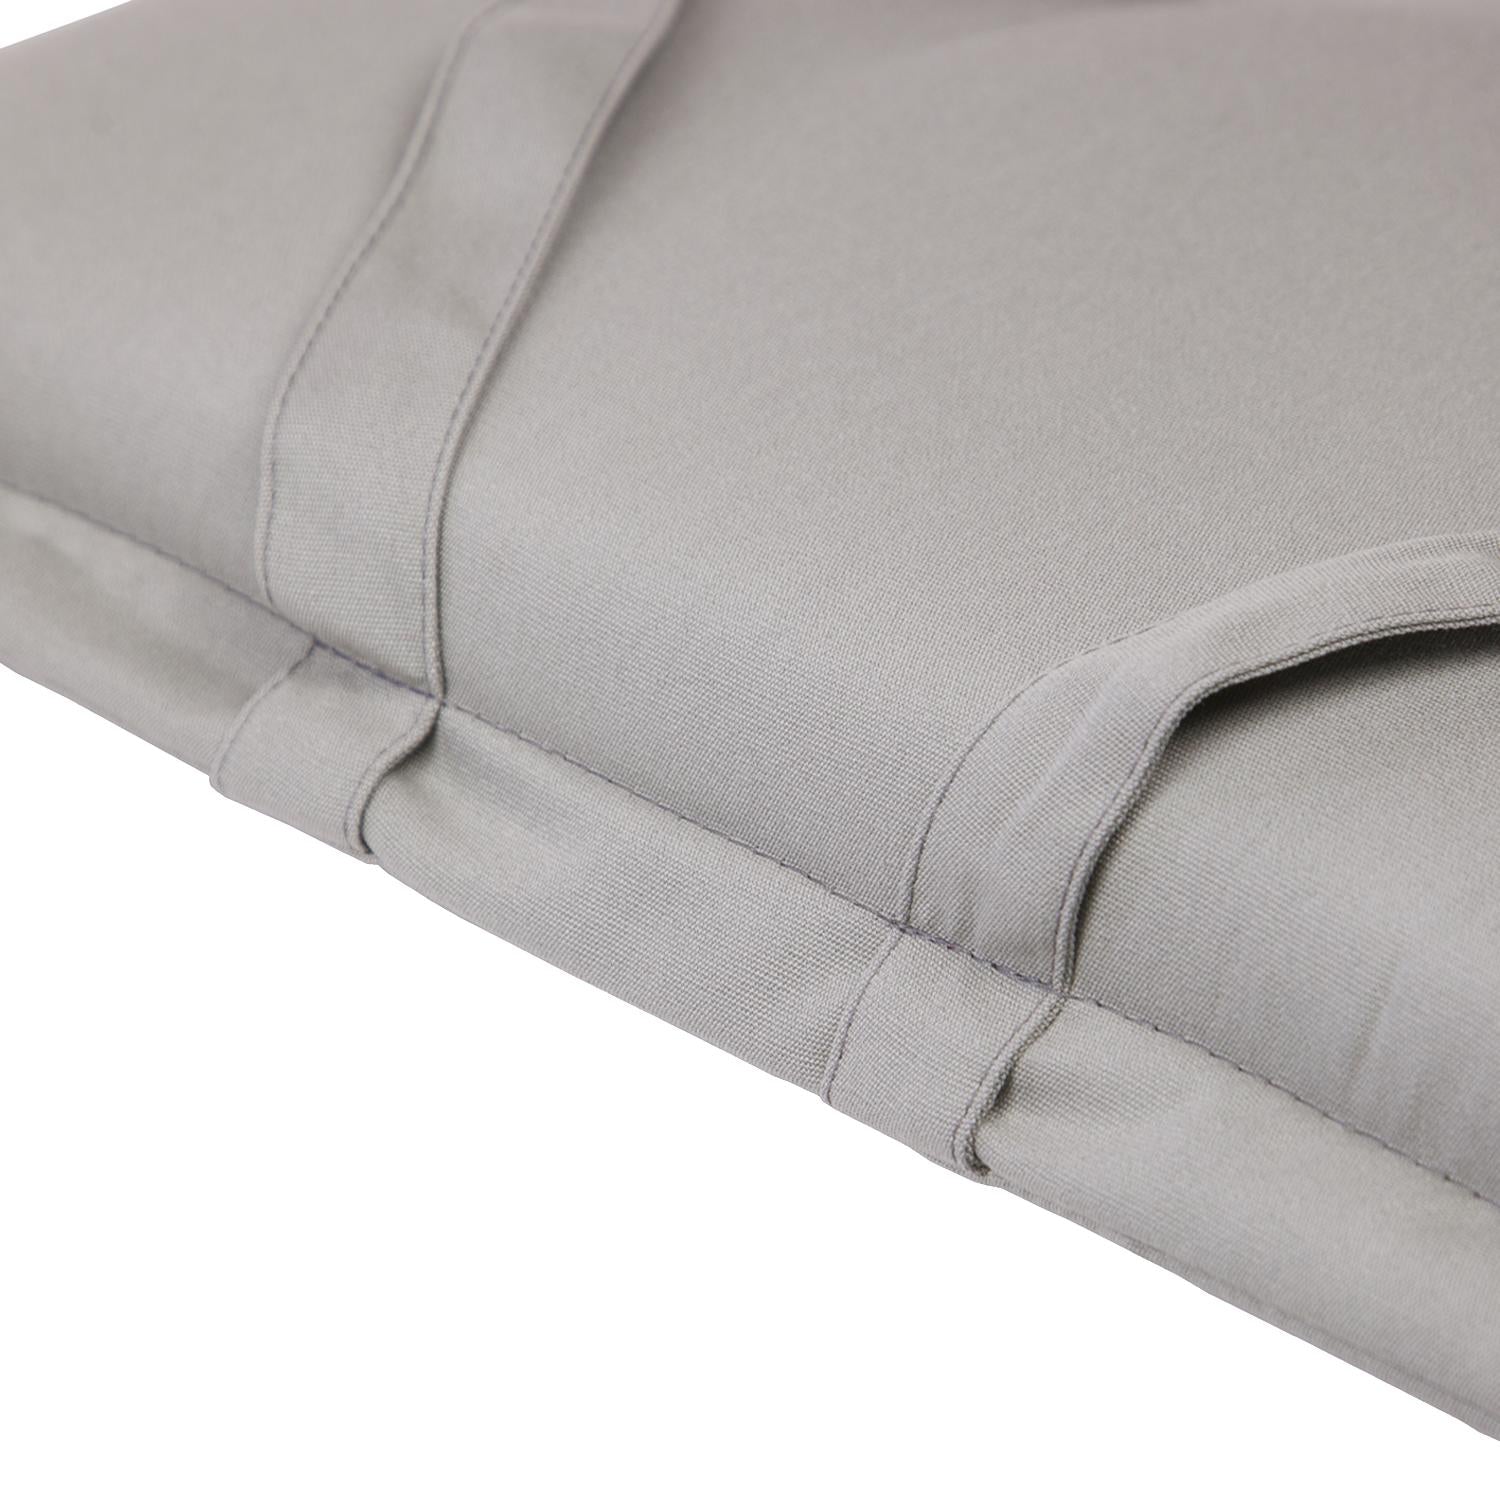 Kopu® Prisma Silver Comfortabel Tuinkussen Hoge Rug - 2 stuks